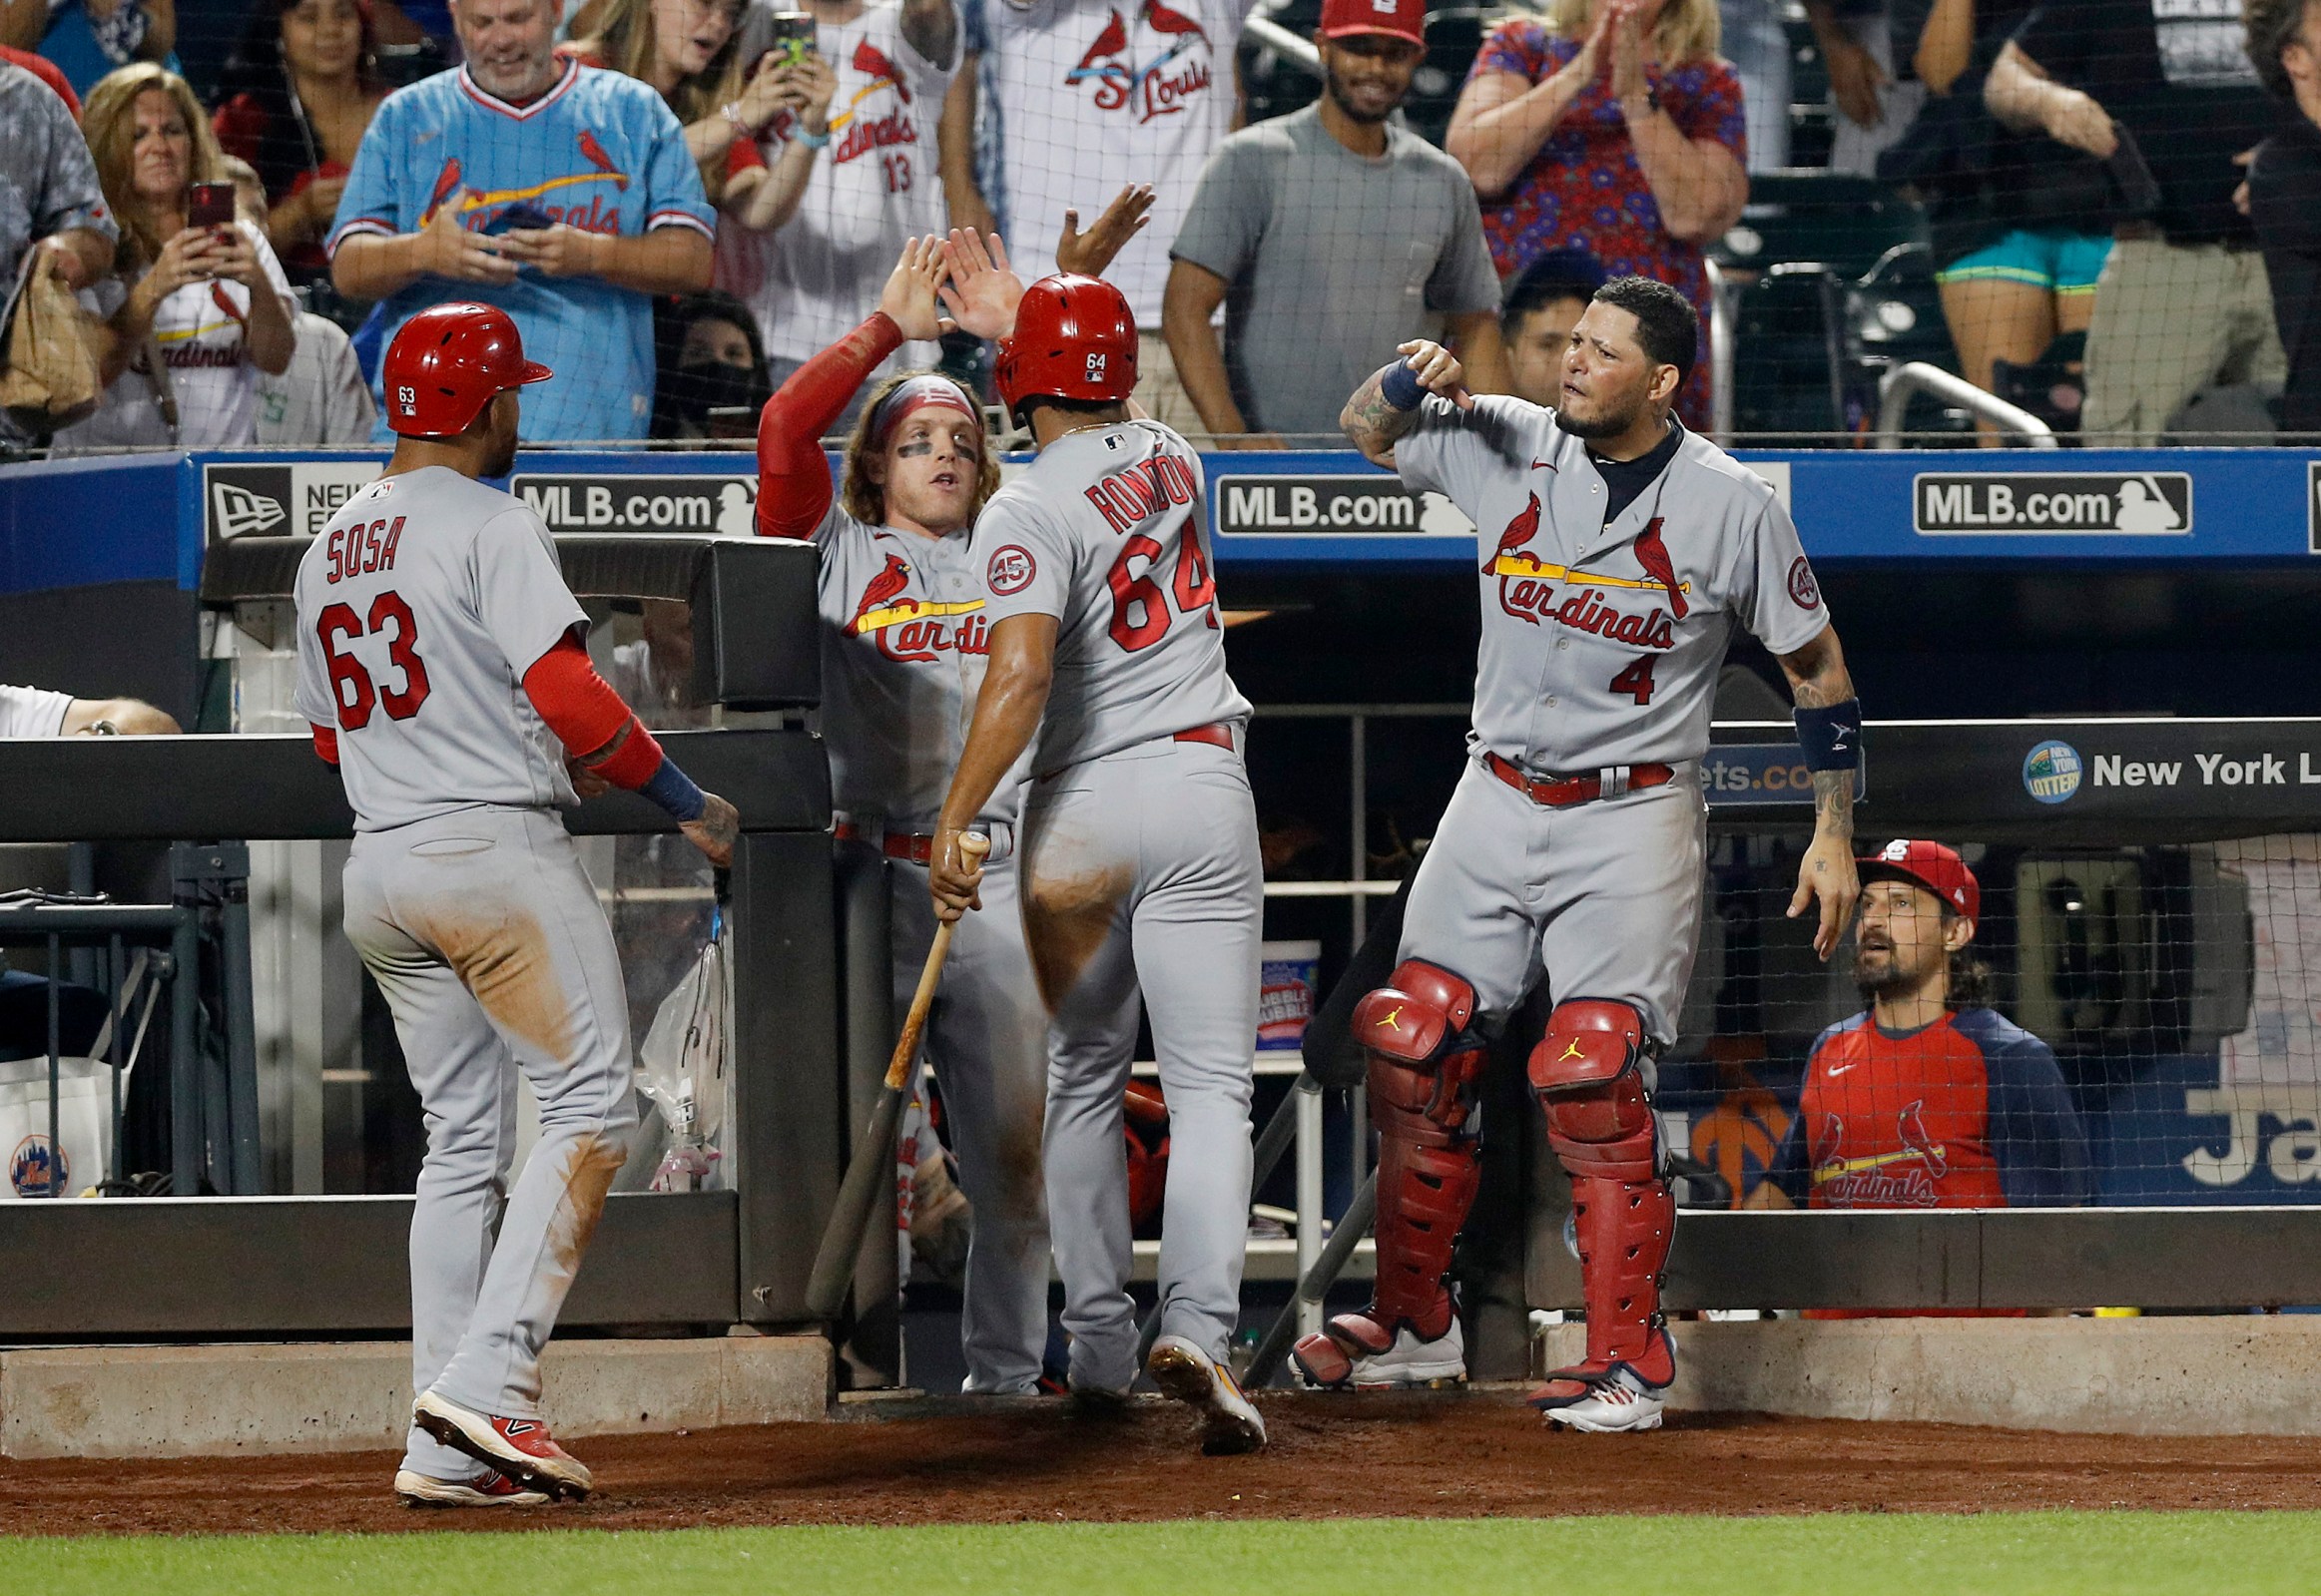 The Cardinals celebrate after scoring